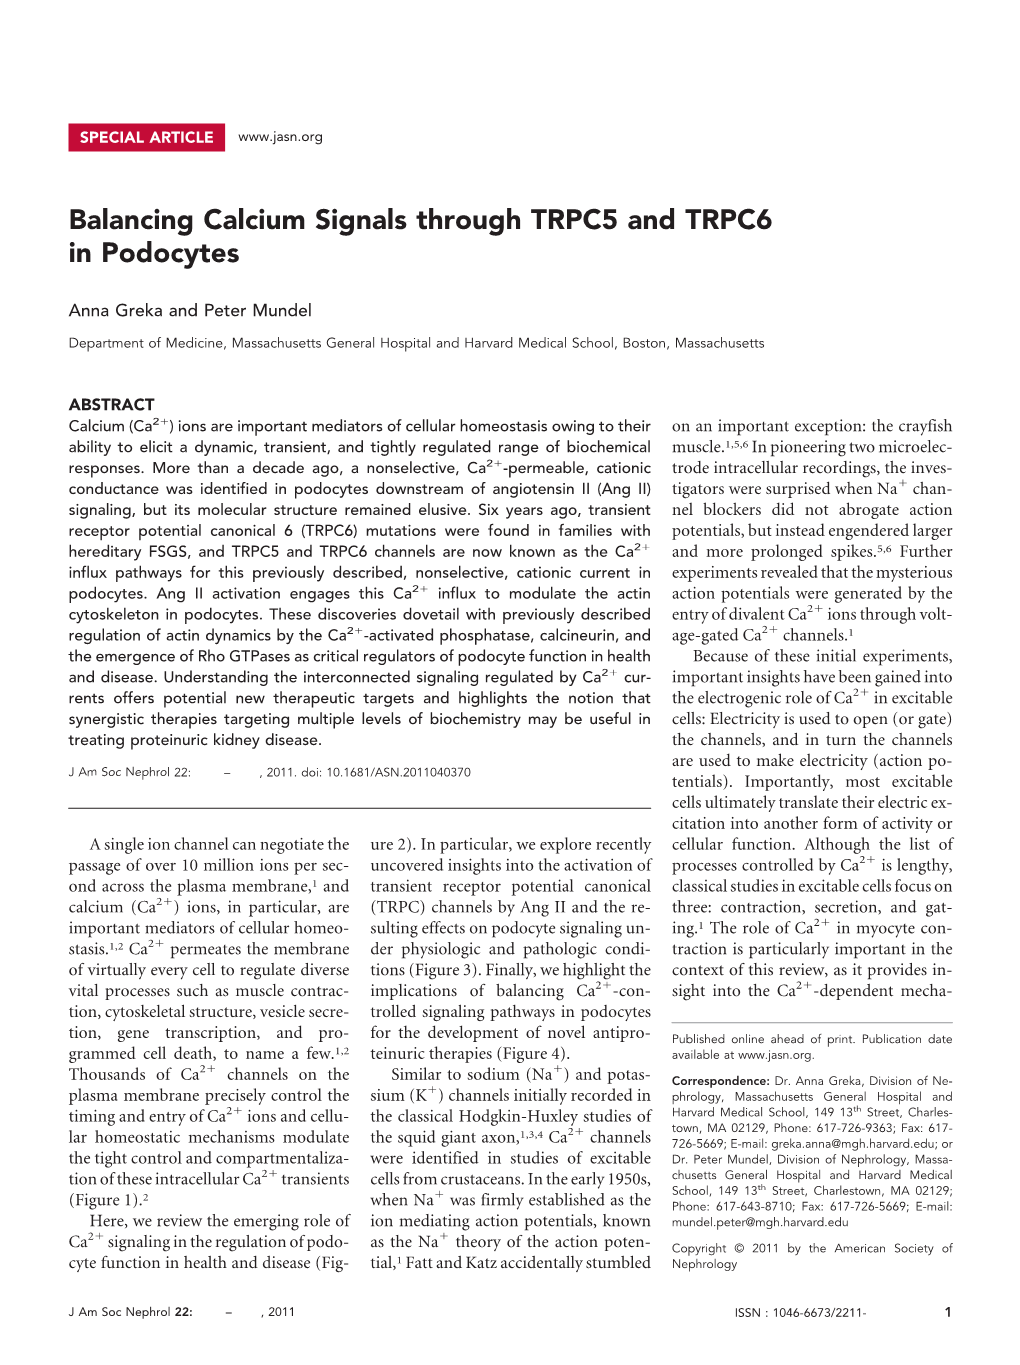 Balancing Calcium Signals Through TRPC5 and TRPC6 in Podocytes